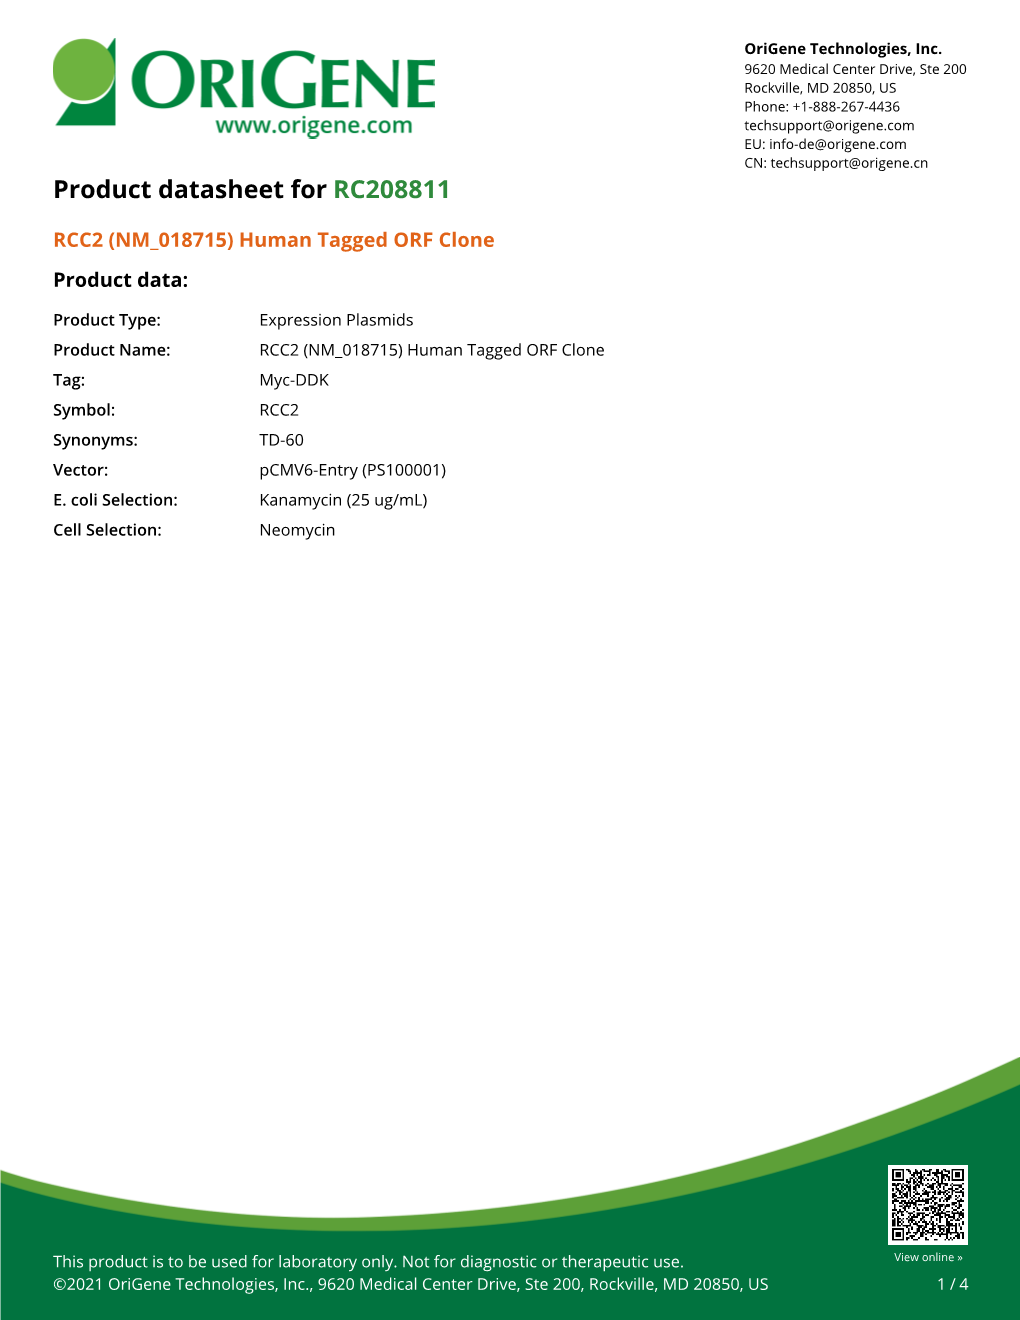 RCC2 (NM 018715) Human Tagged ORF Clone Product Data